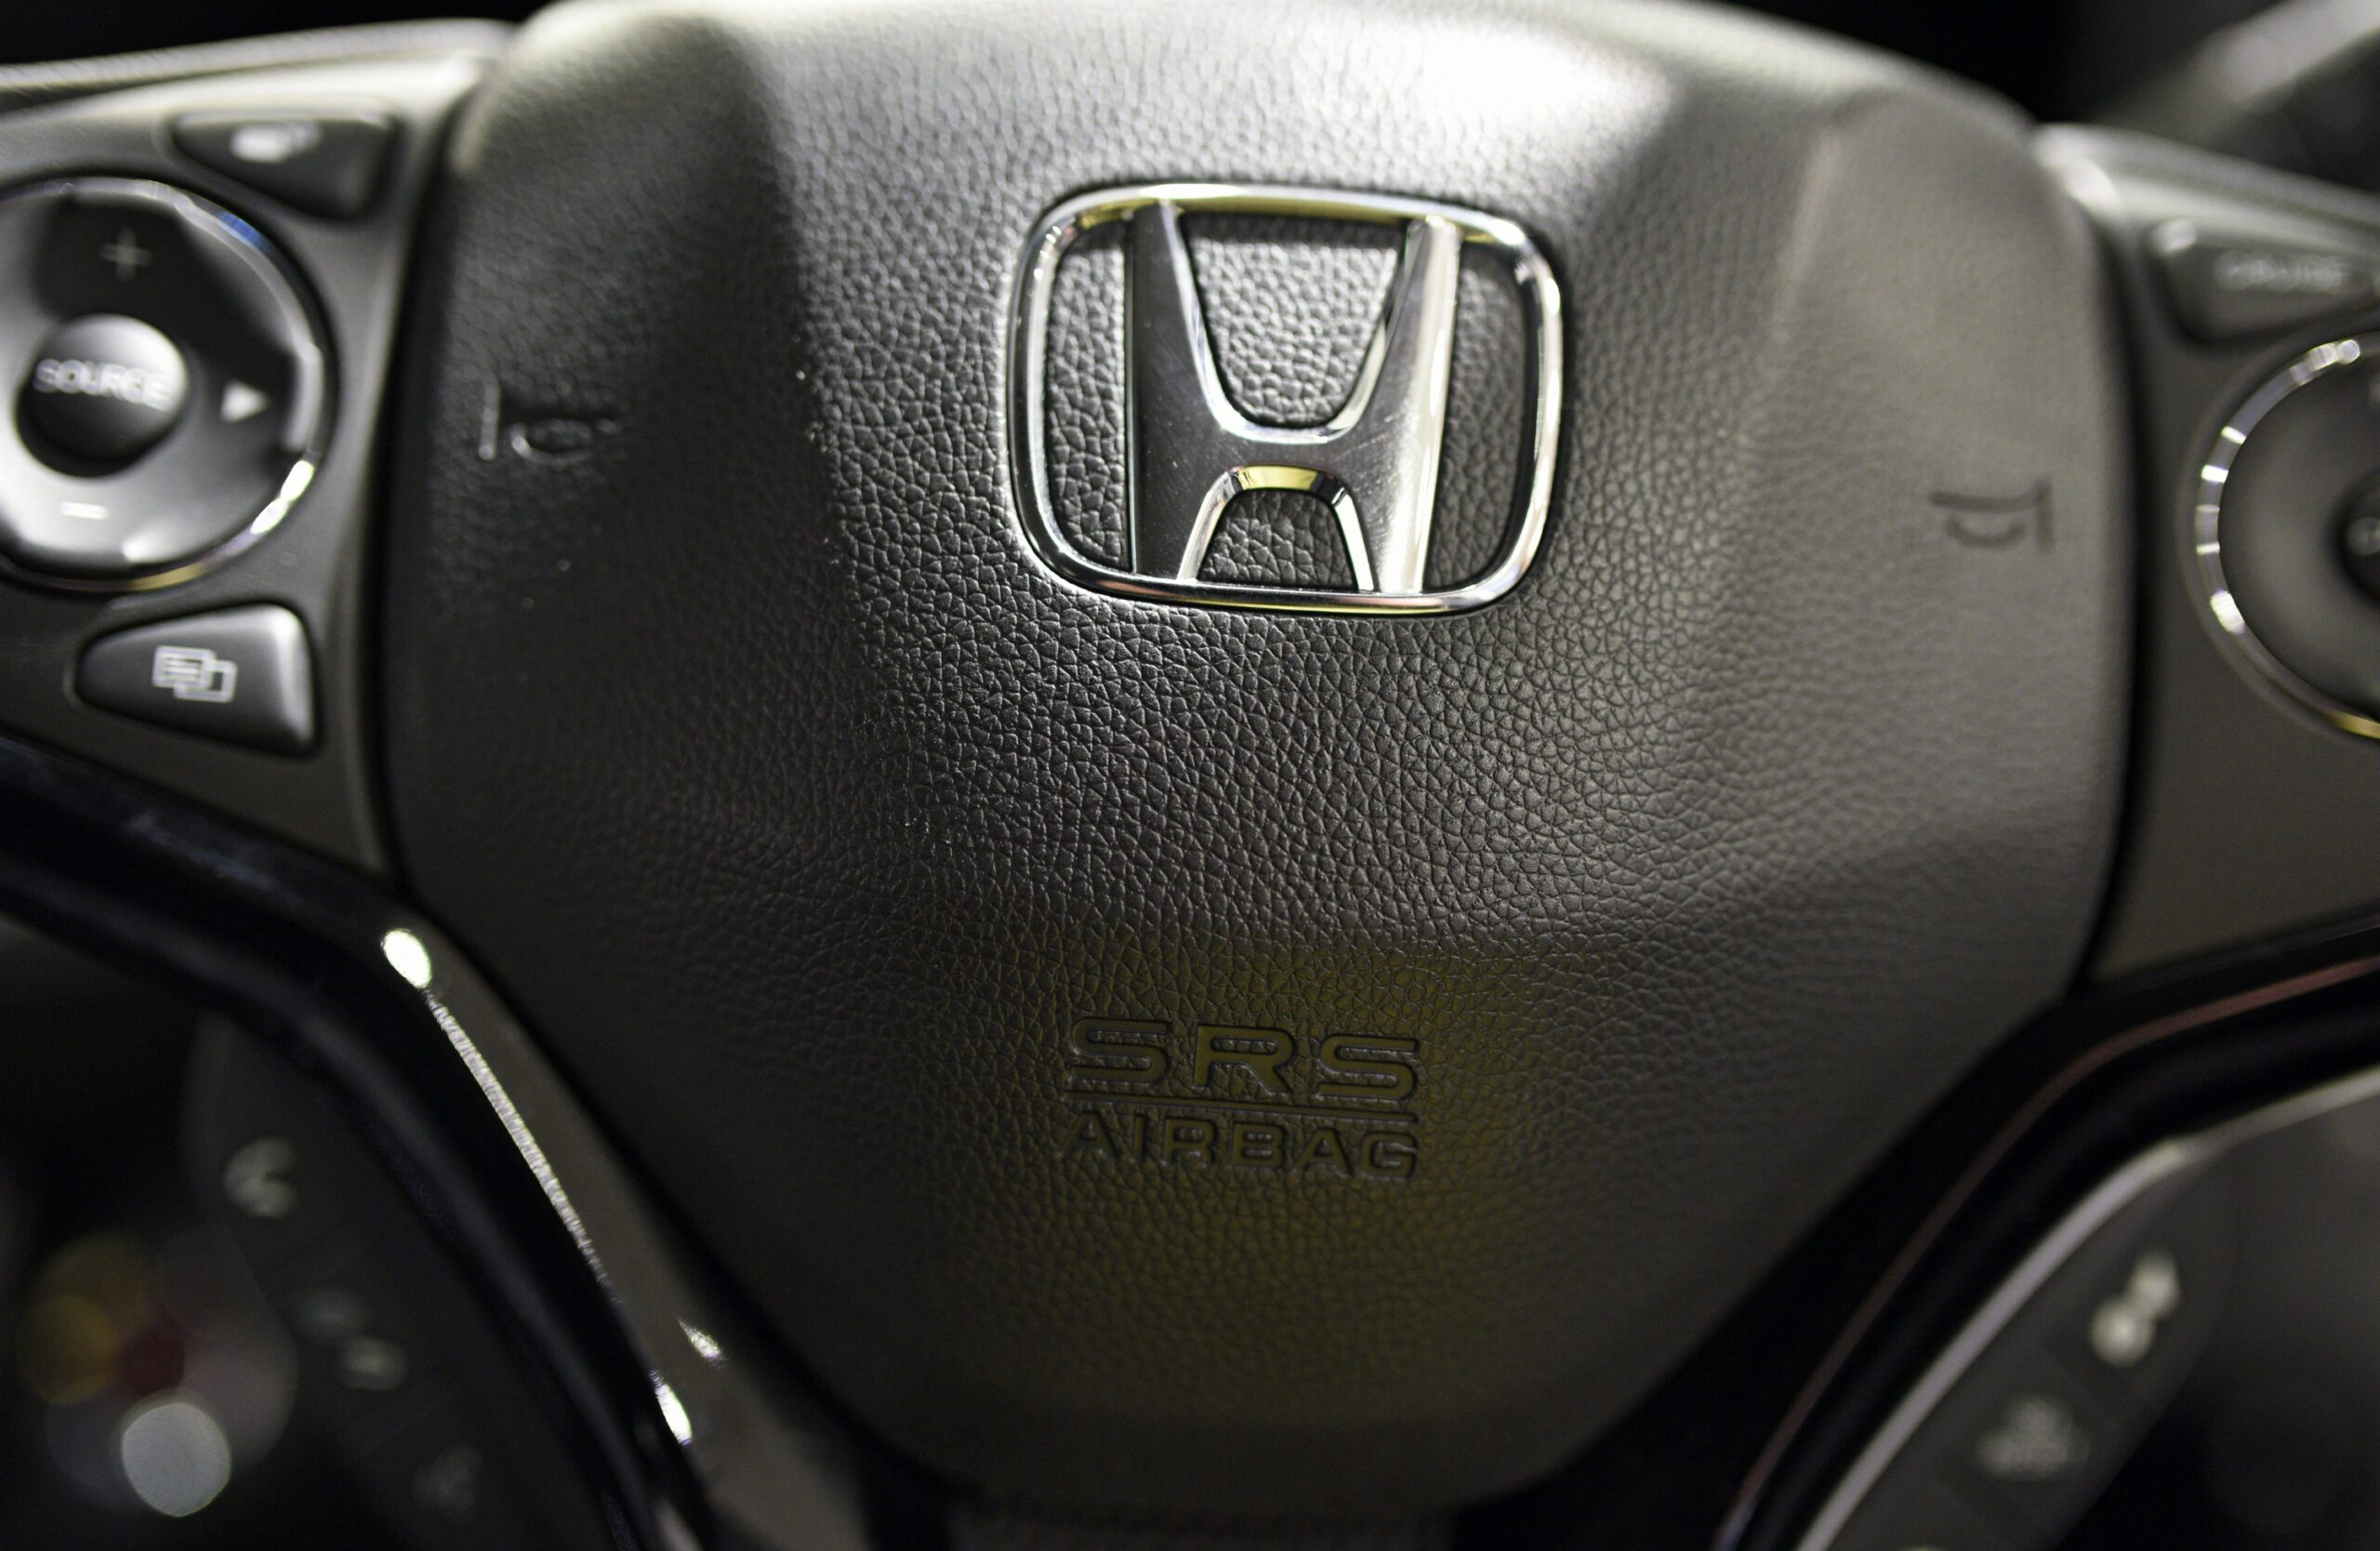 Honda recalls 2.2M cars in US over airbag concerns